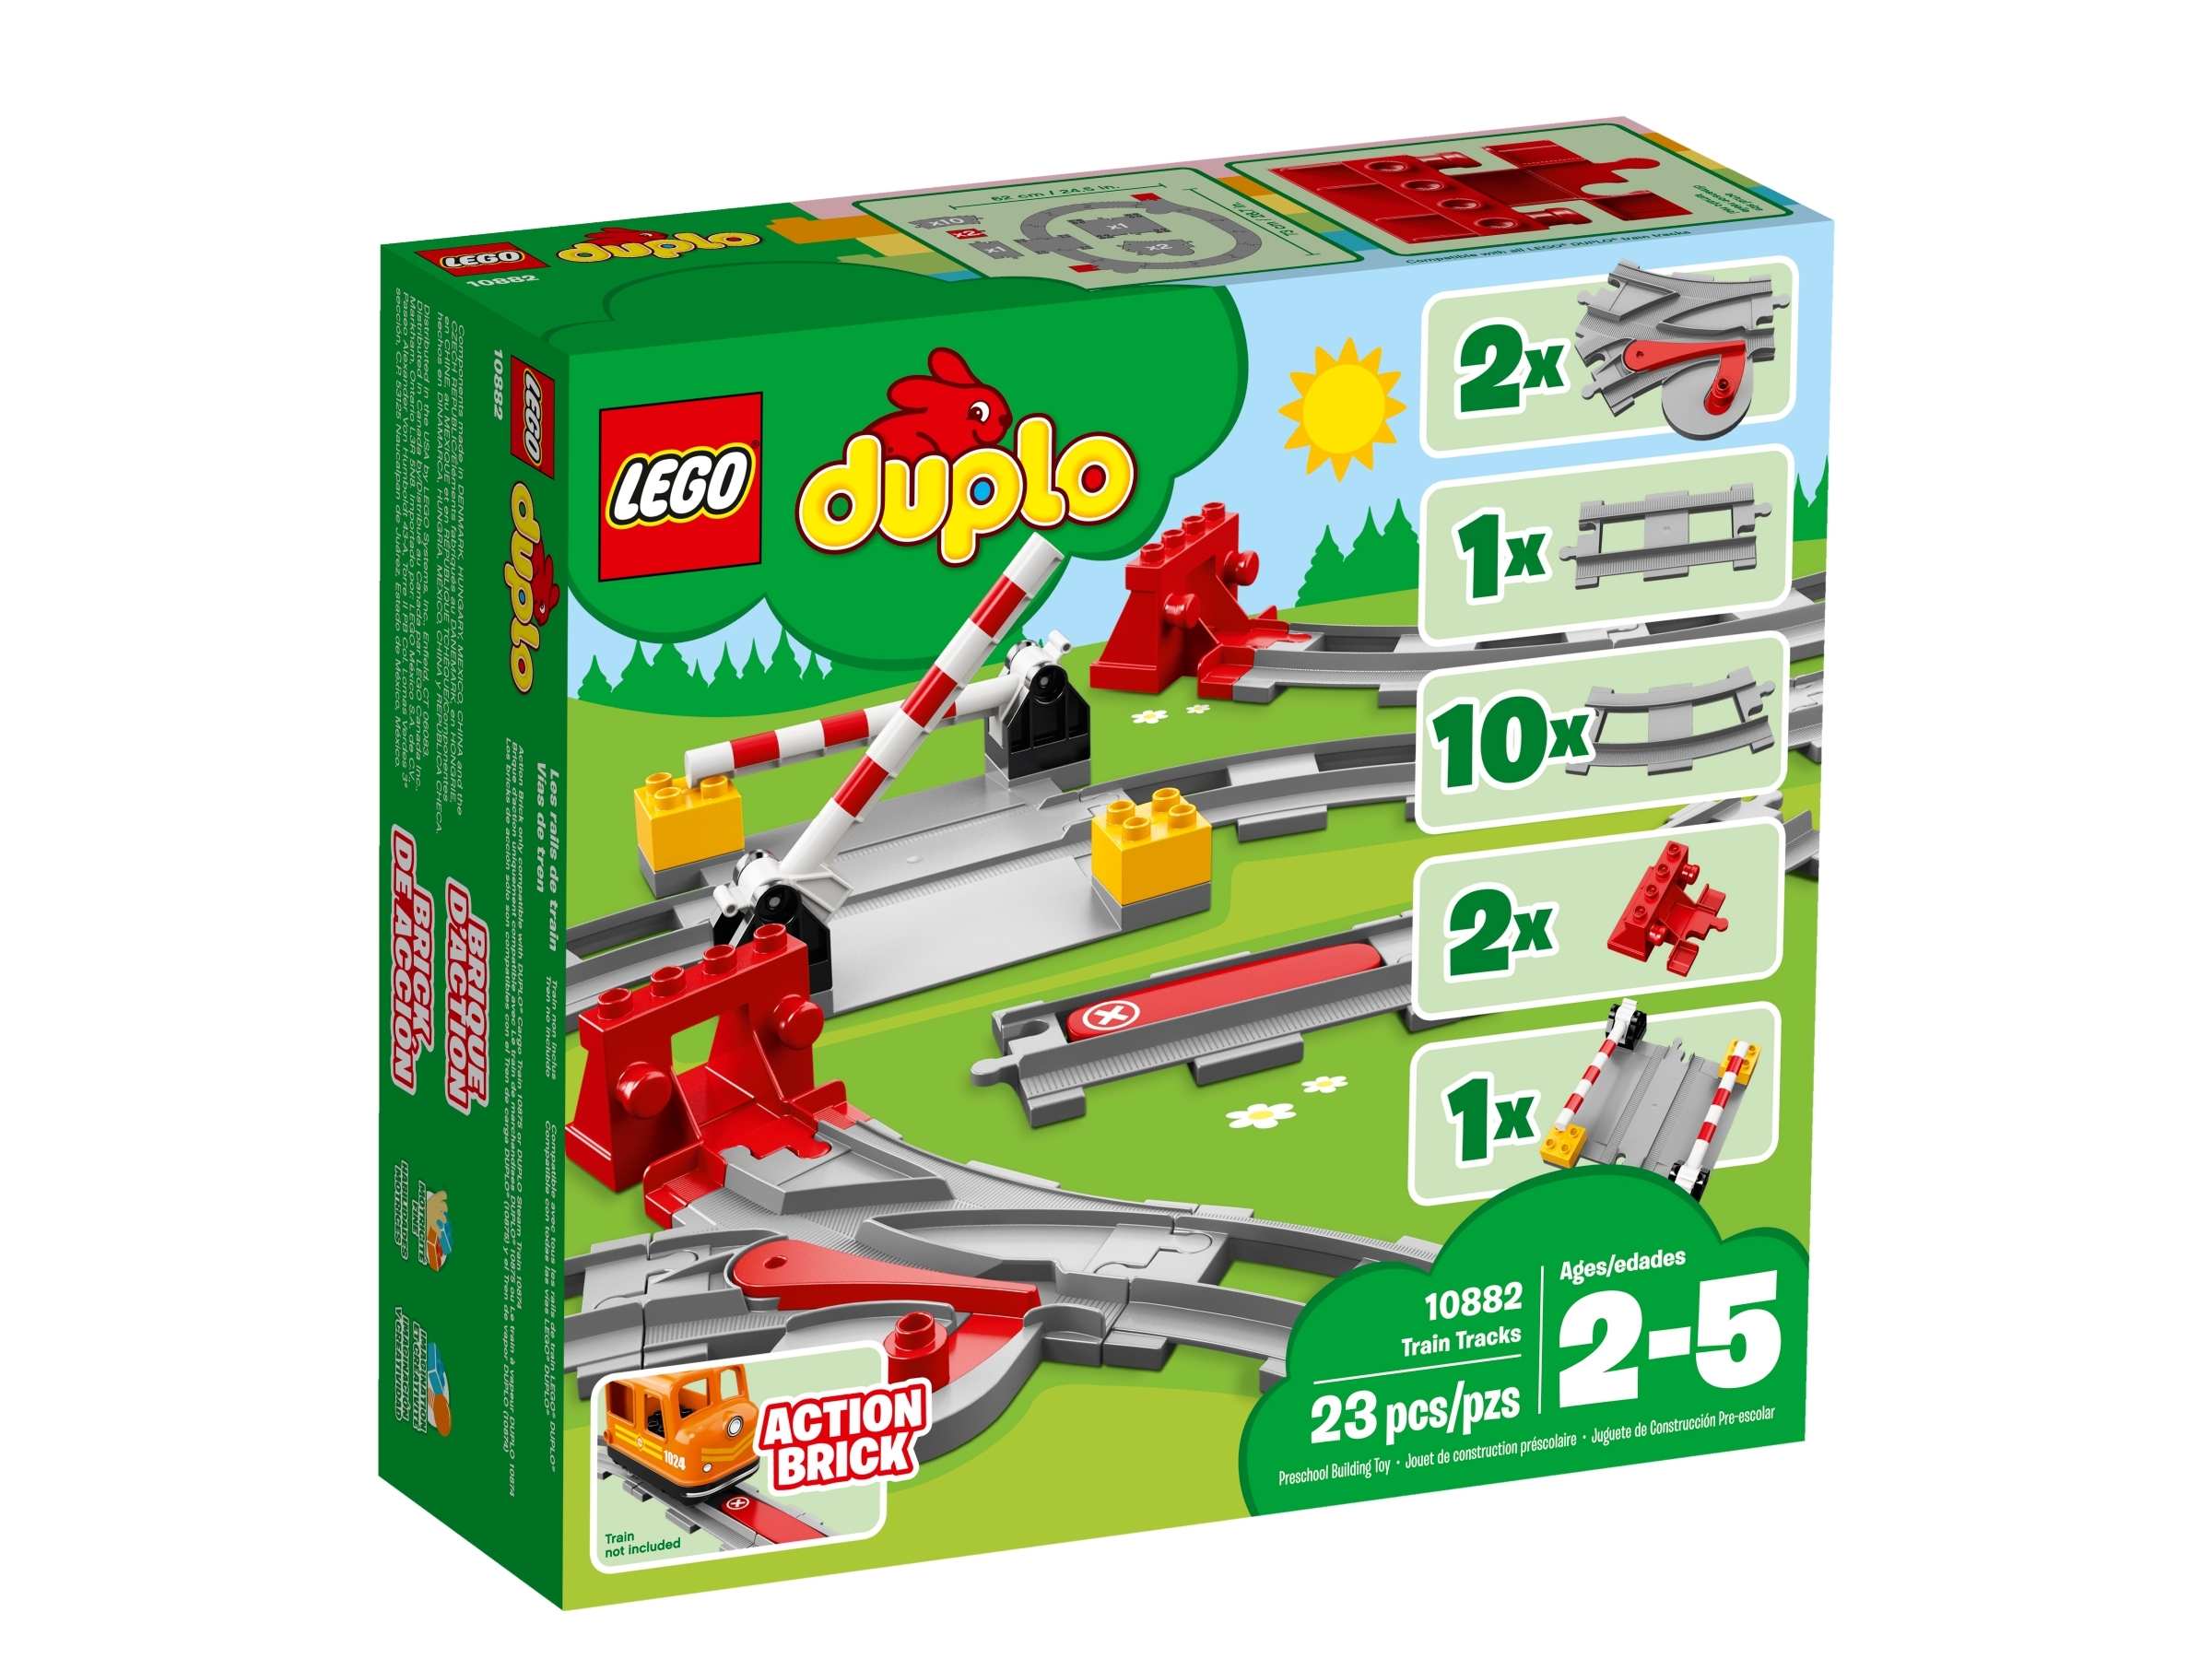 Lego Duplo Train Tracks Railway Set with Action Brick 10882 